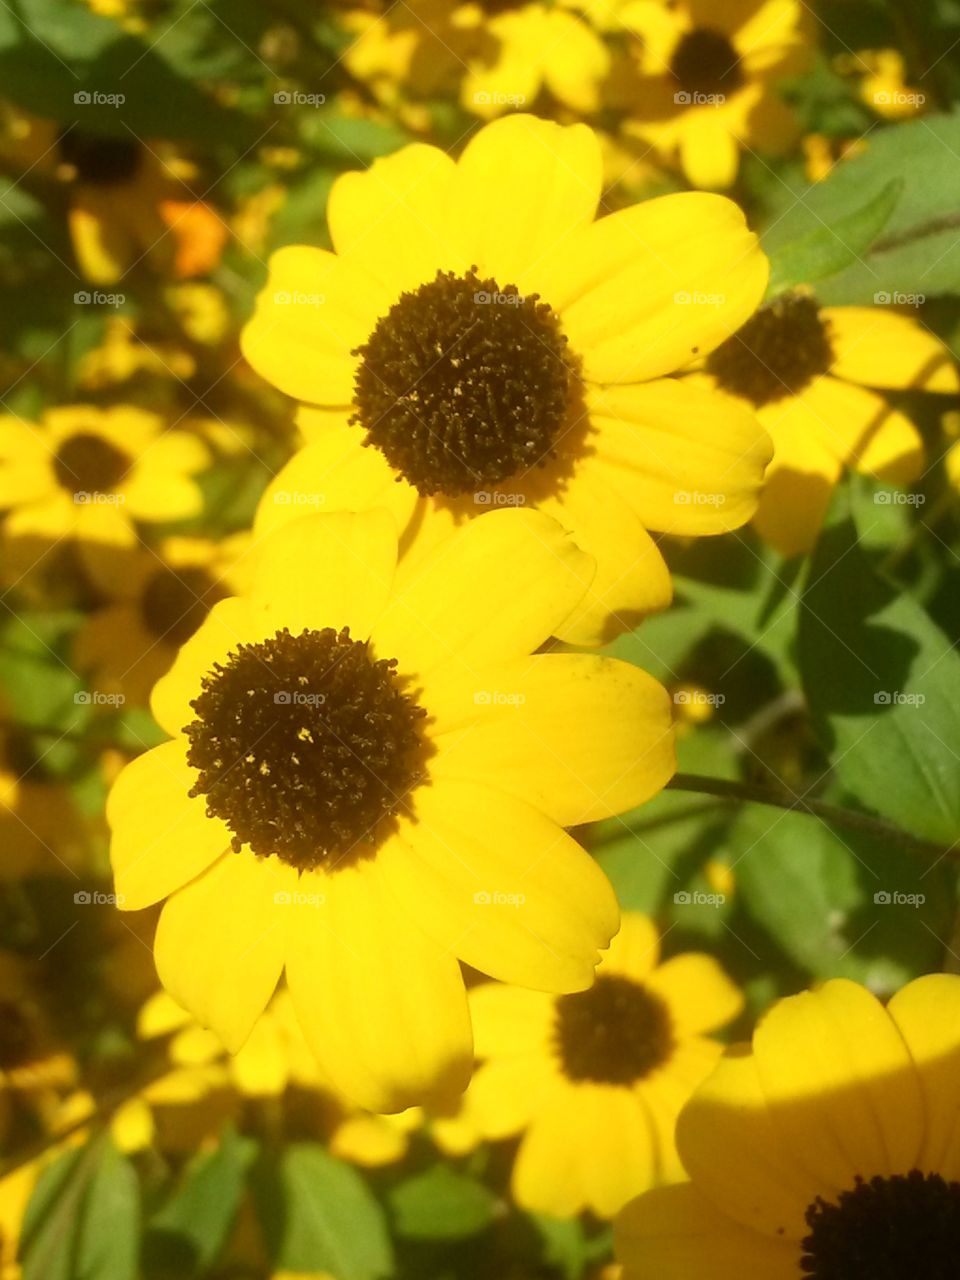 Nice yellow flowers